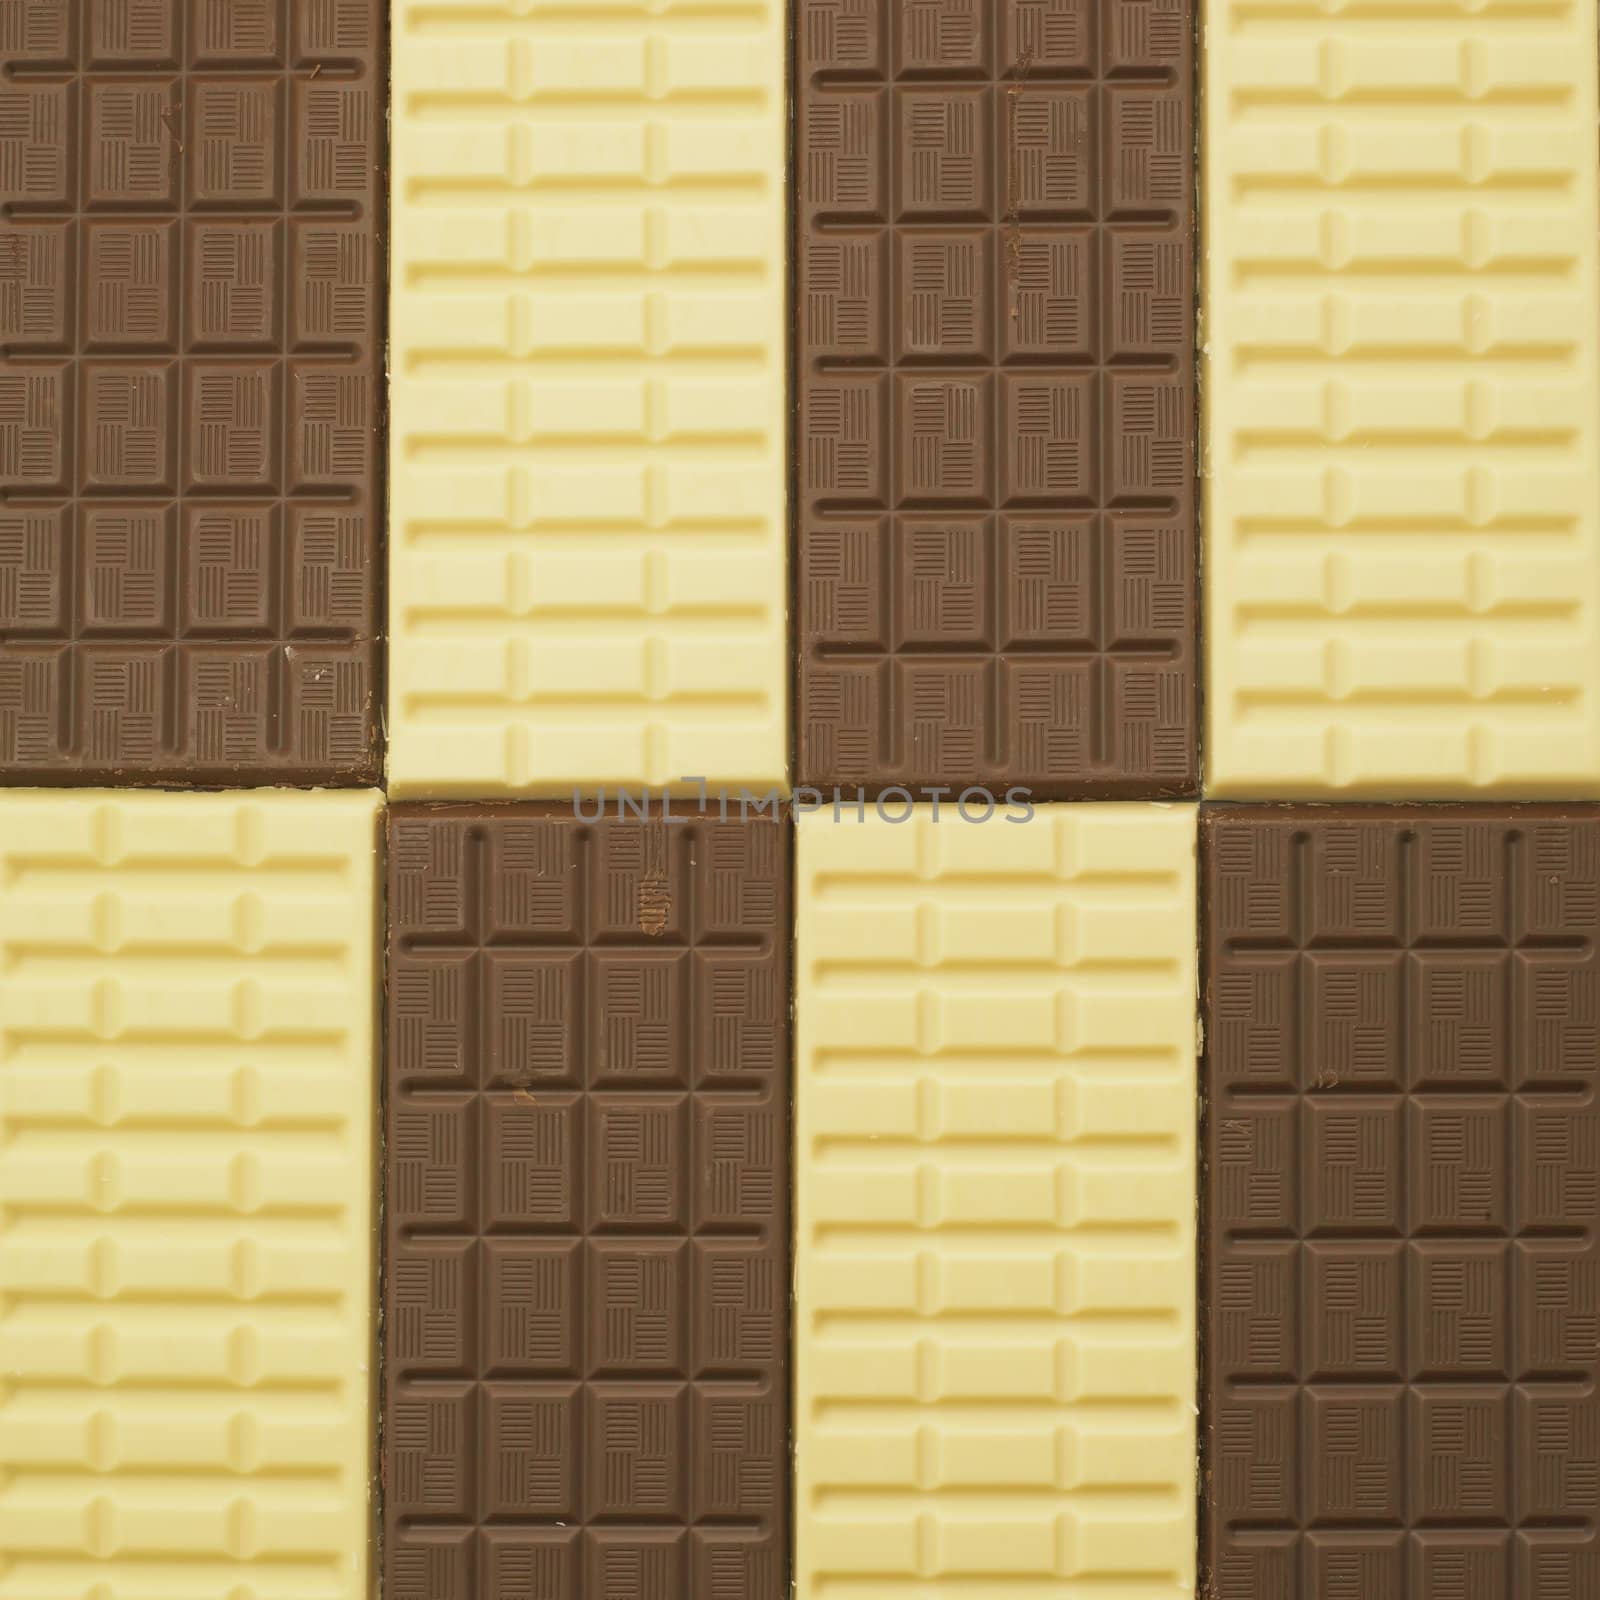 chocolate bars by phbcz